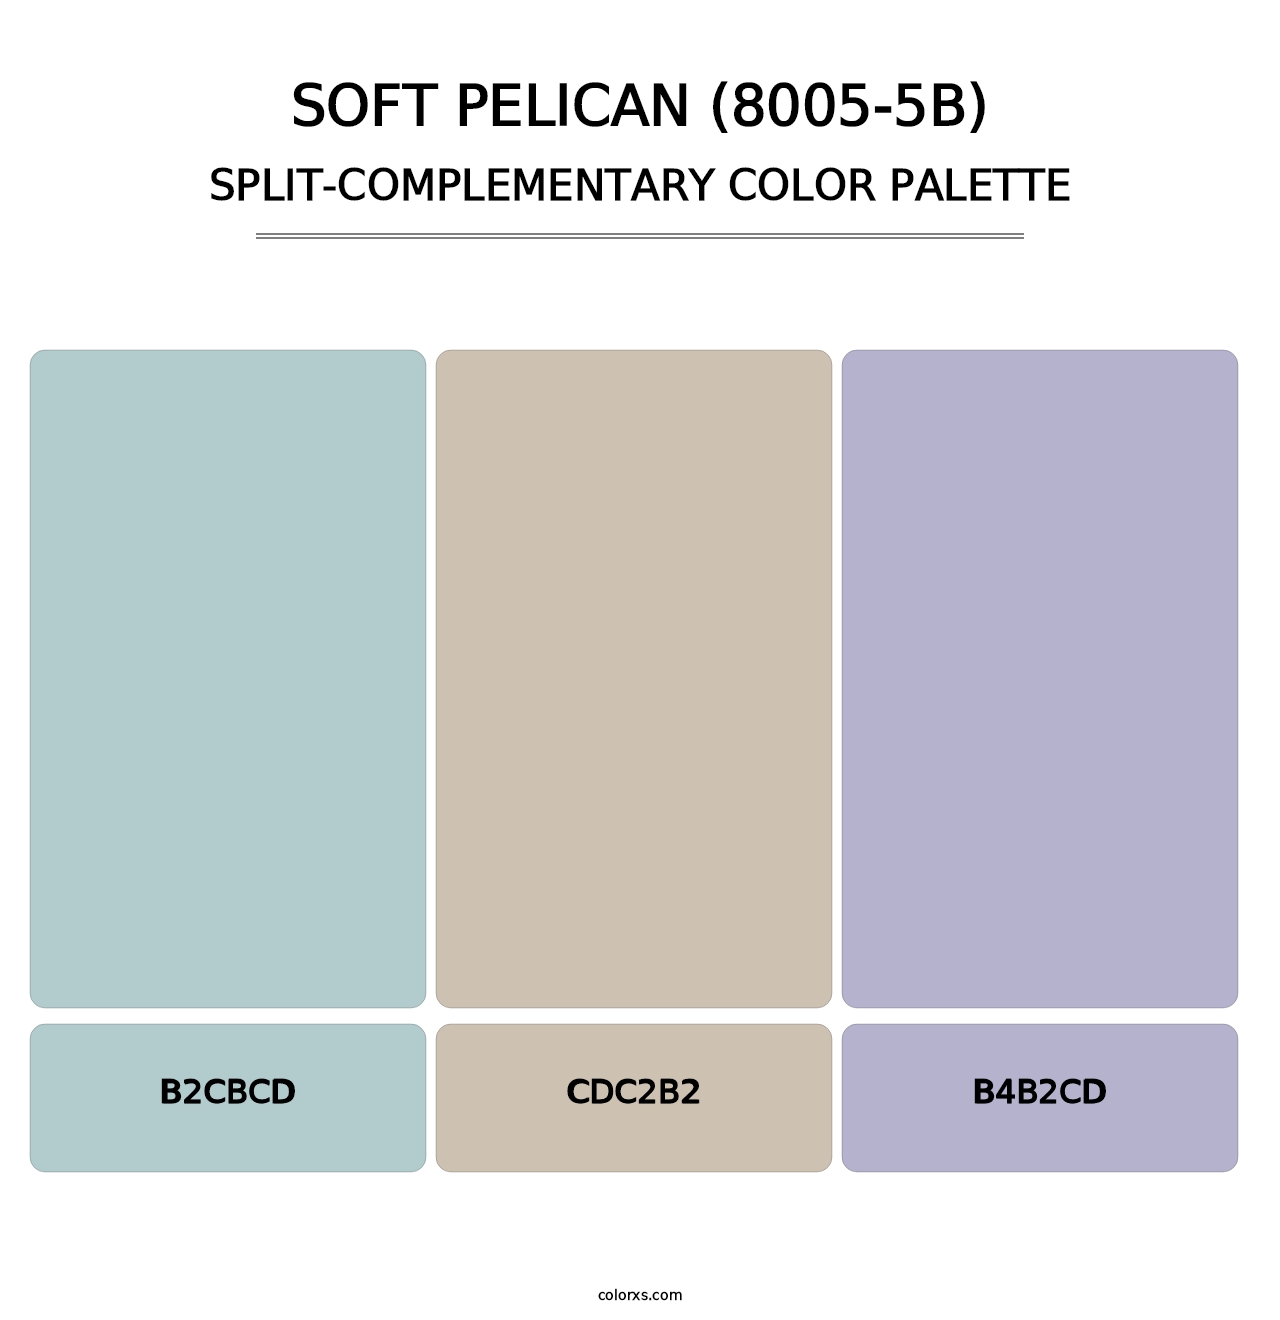 Soft Pelican (8005-5B) - Split-Complementary Color Palette